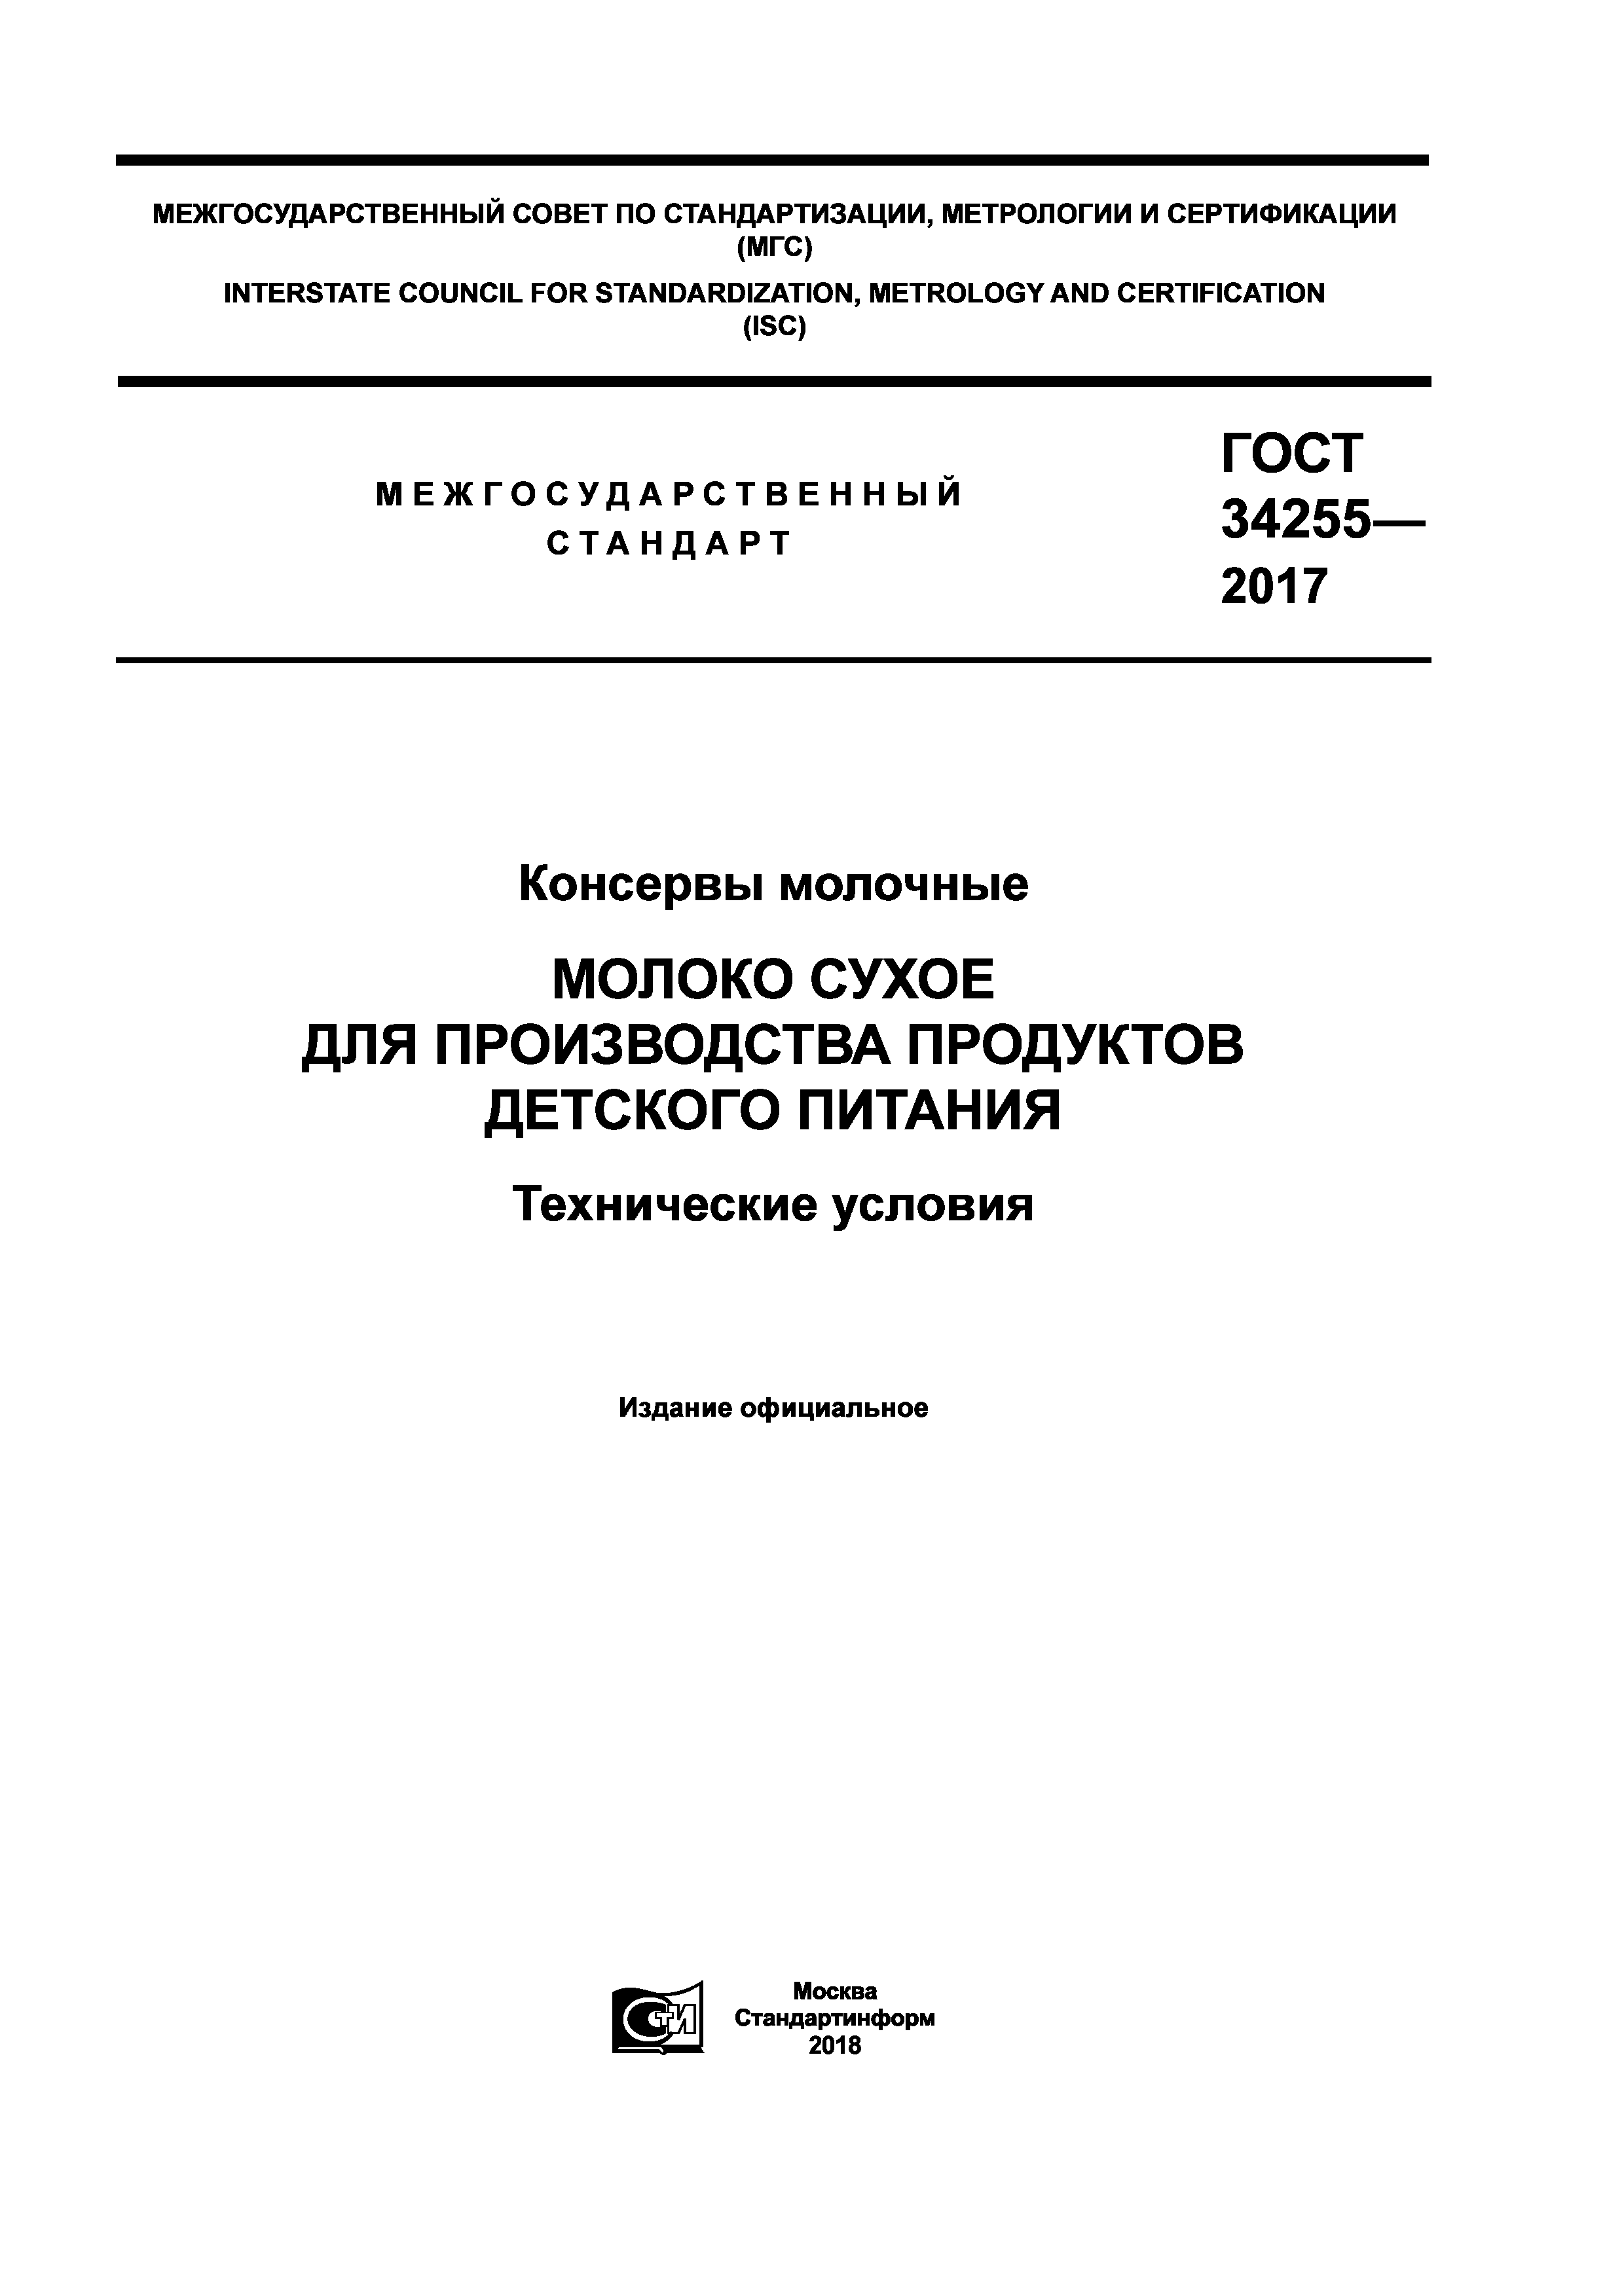 ГОСТ 34255-2017